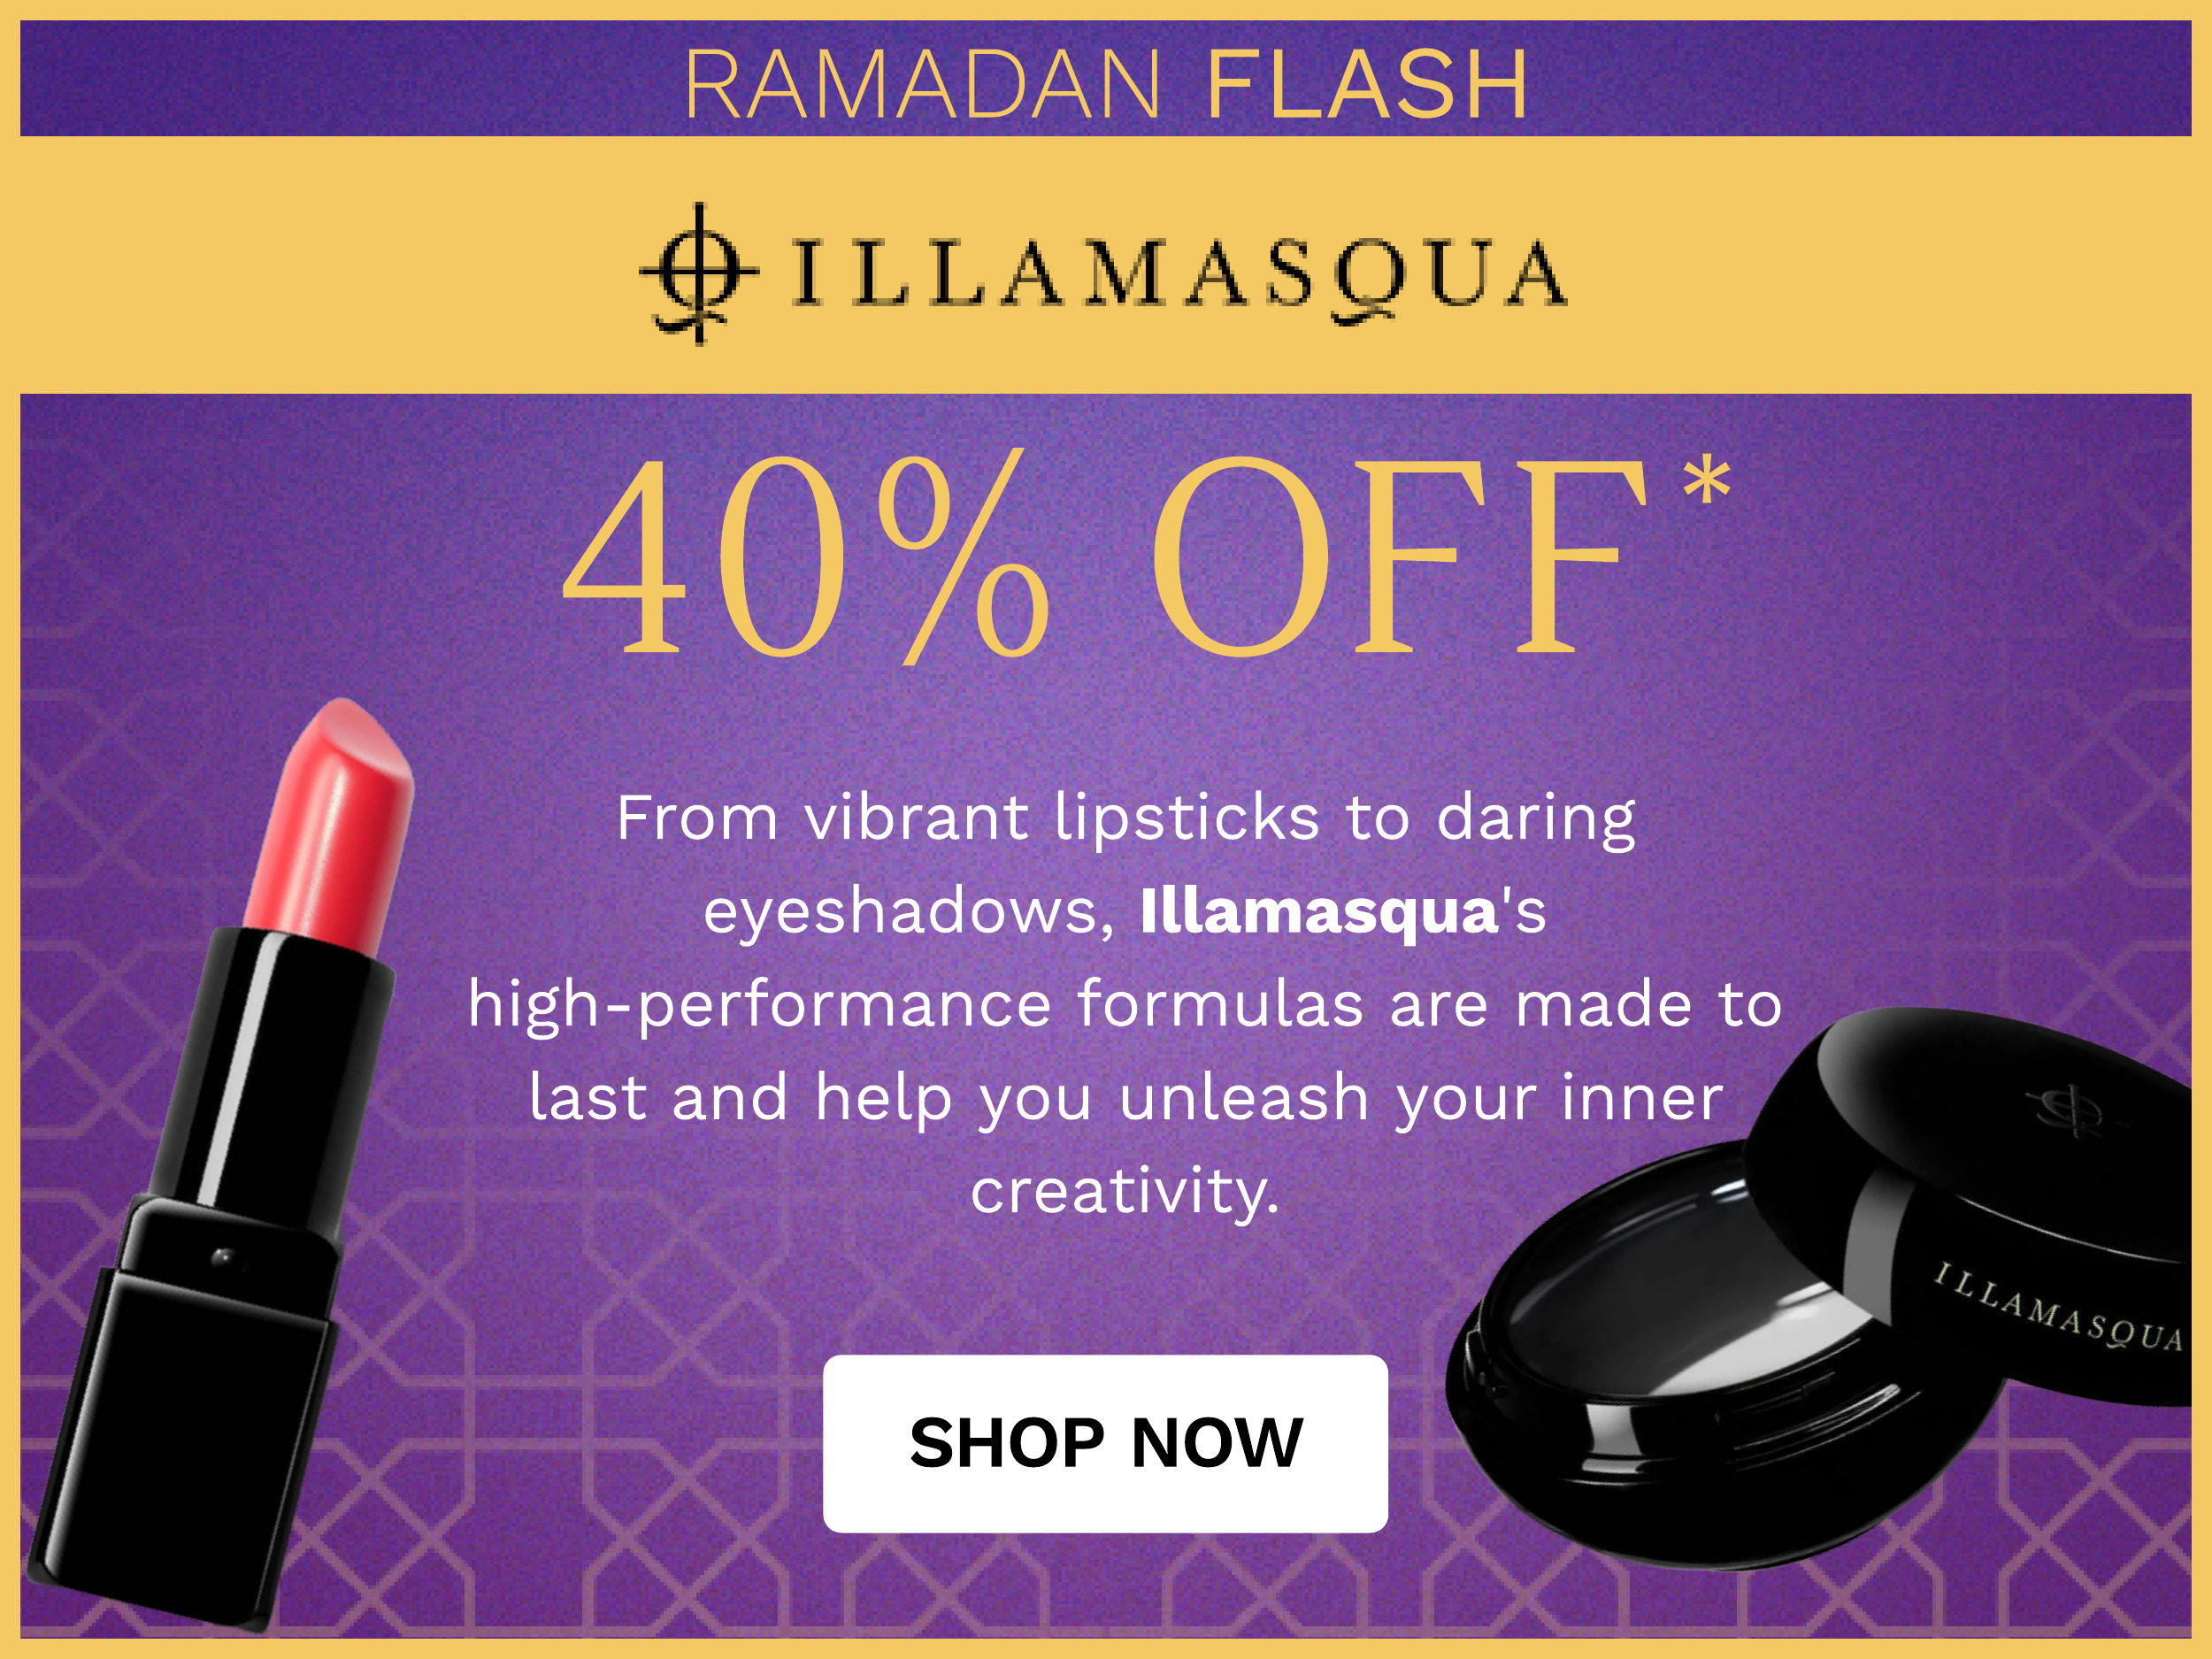 RAMADAN FLASH @ ILLAMASQUA SOl l From vibrant lipsticks to daring eyeshadows, Illamasqua's high-performance formulas are made to last and help you unleash your inner creativity. SHOP NOW 